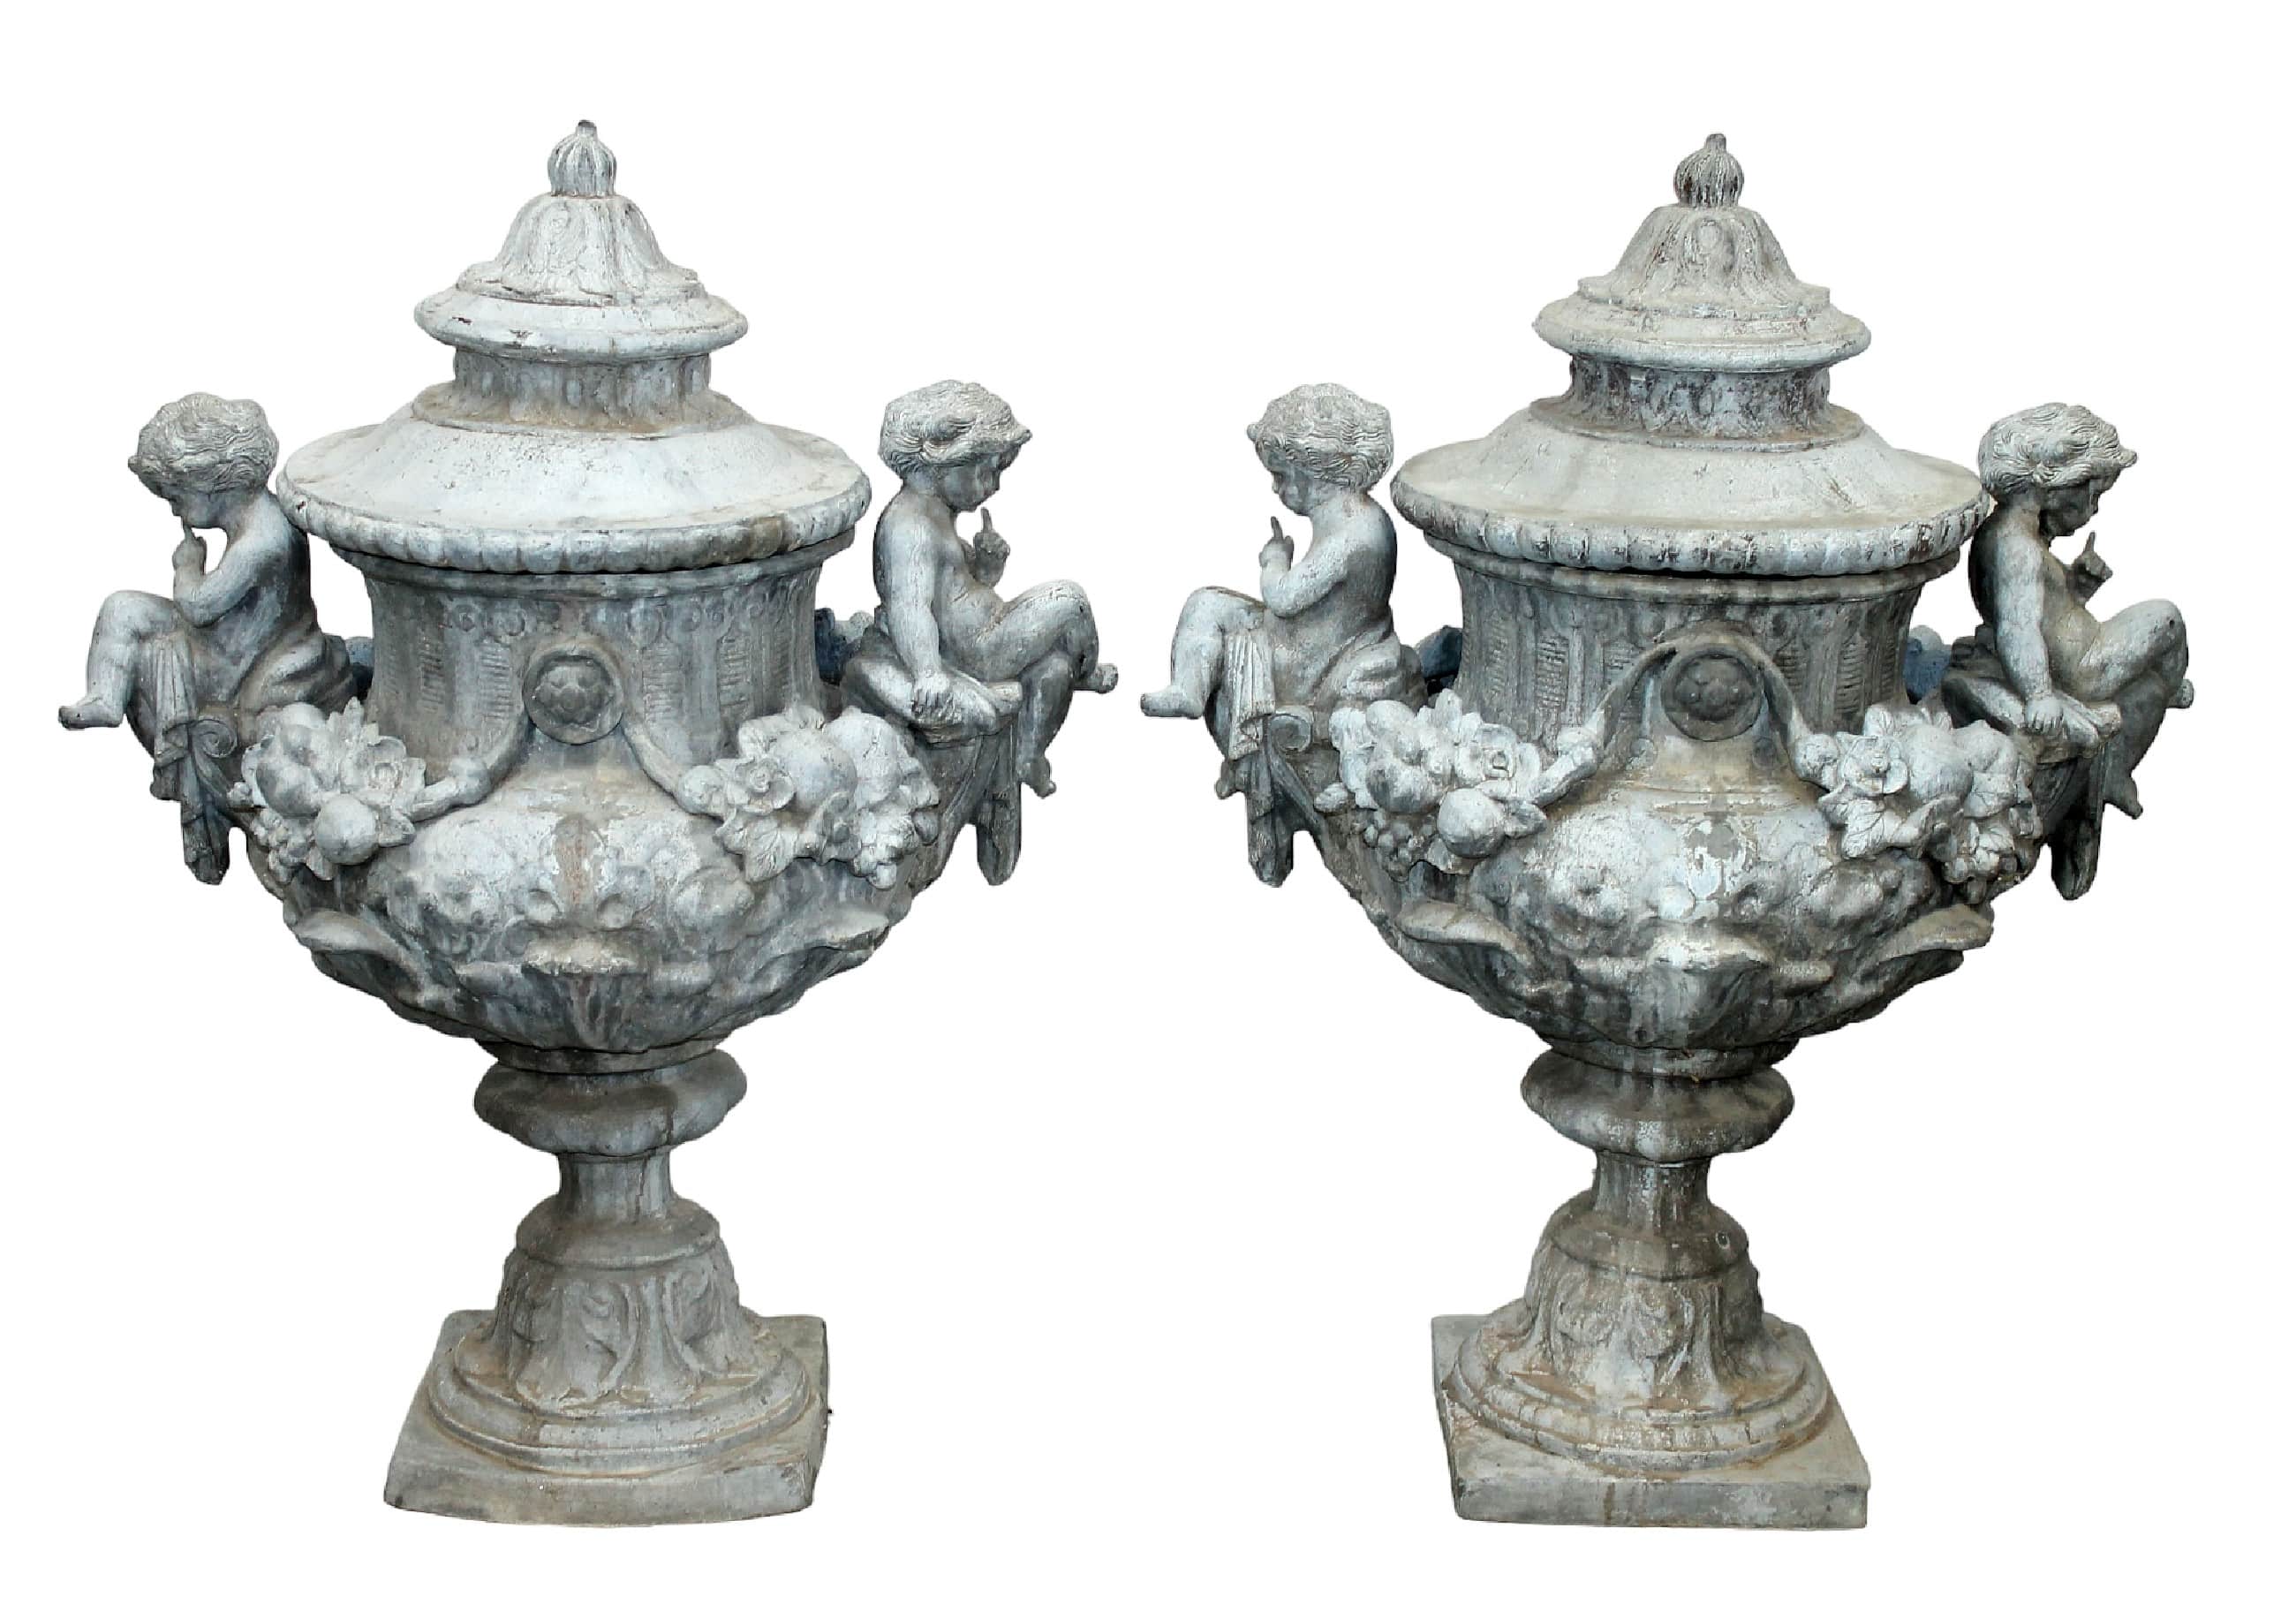 Pair of Antique English lead hush baby cherub urns